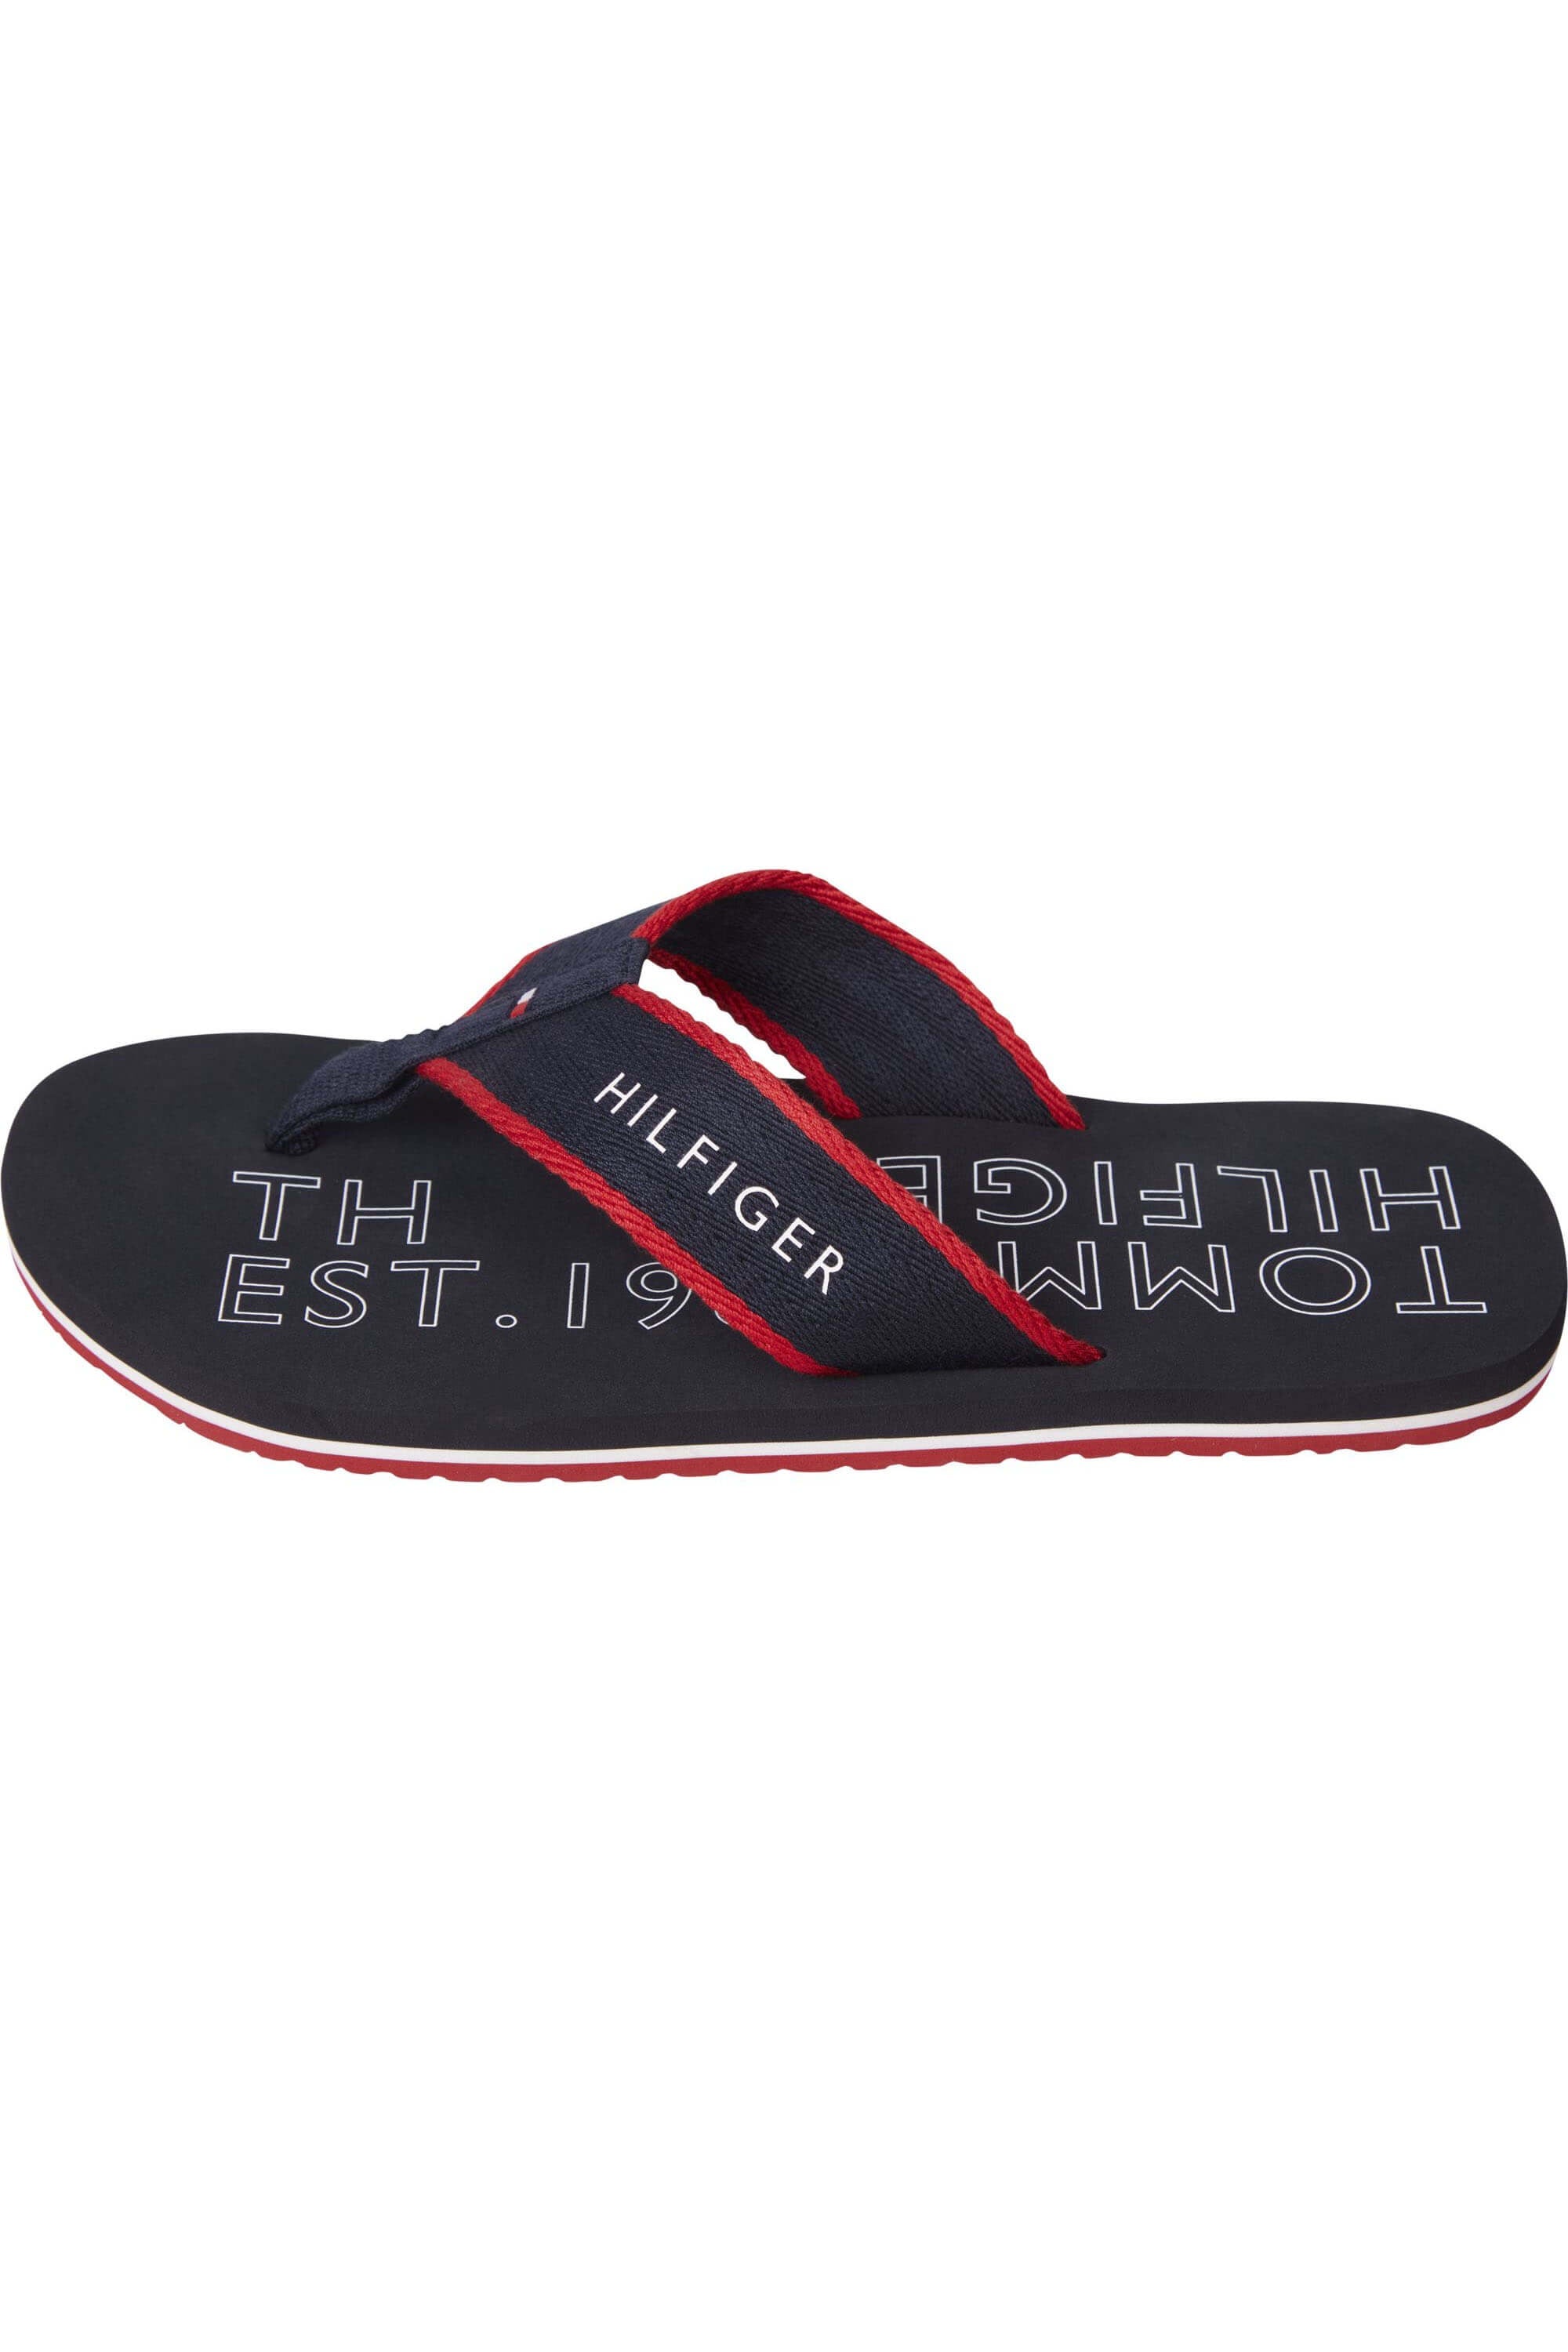 Tommy Hilfiger Sporty Beach Sandals Navy